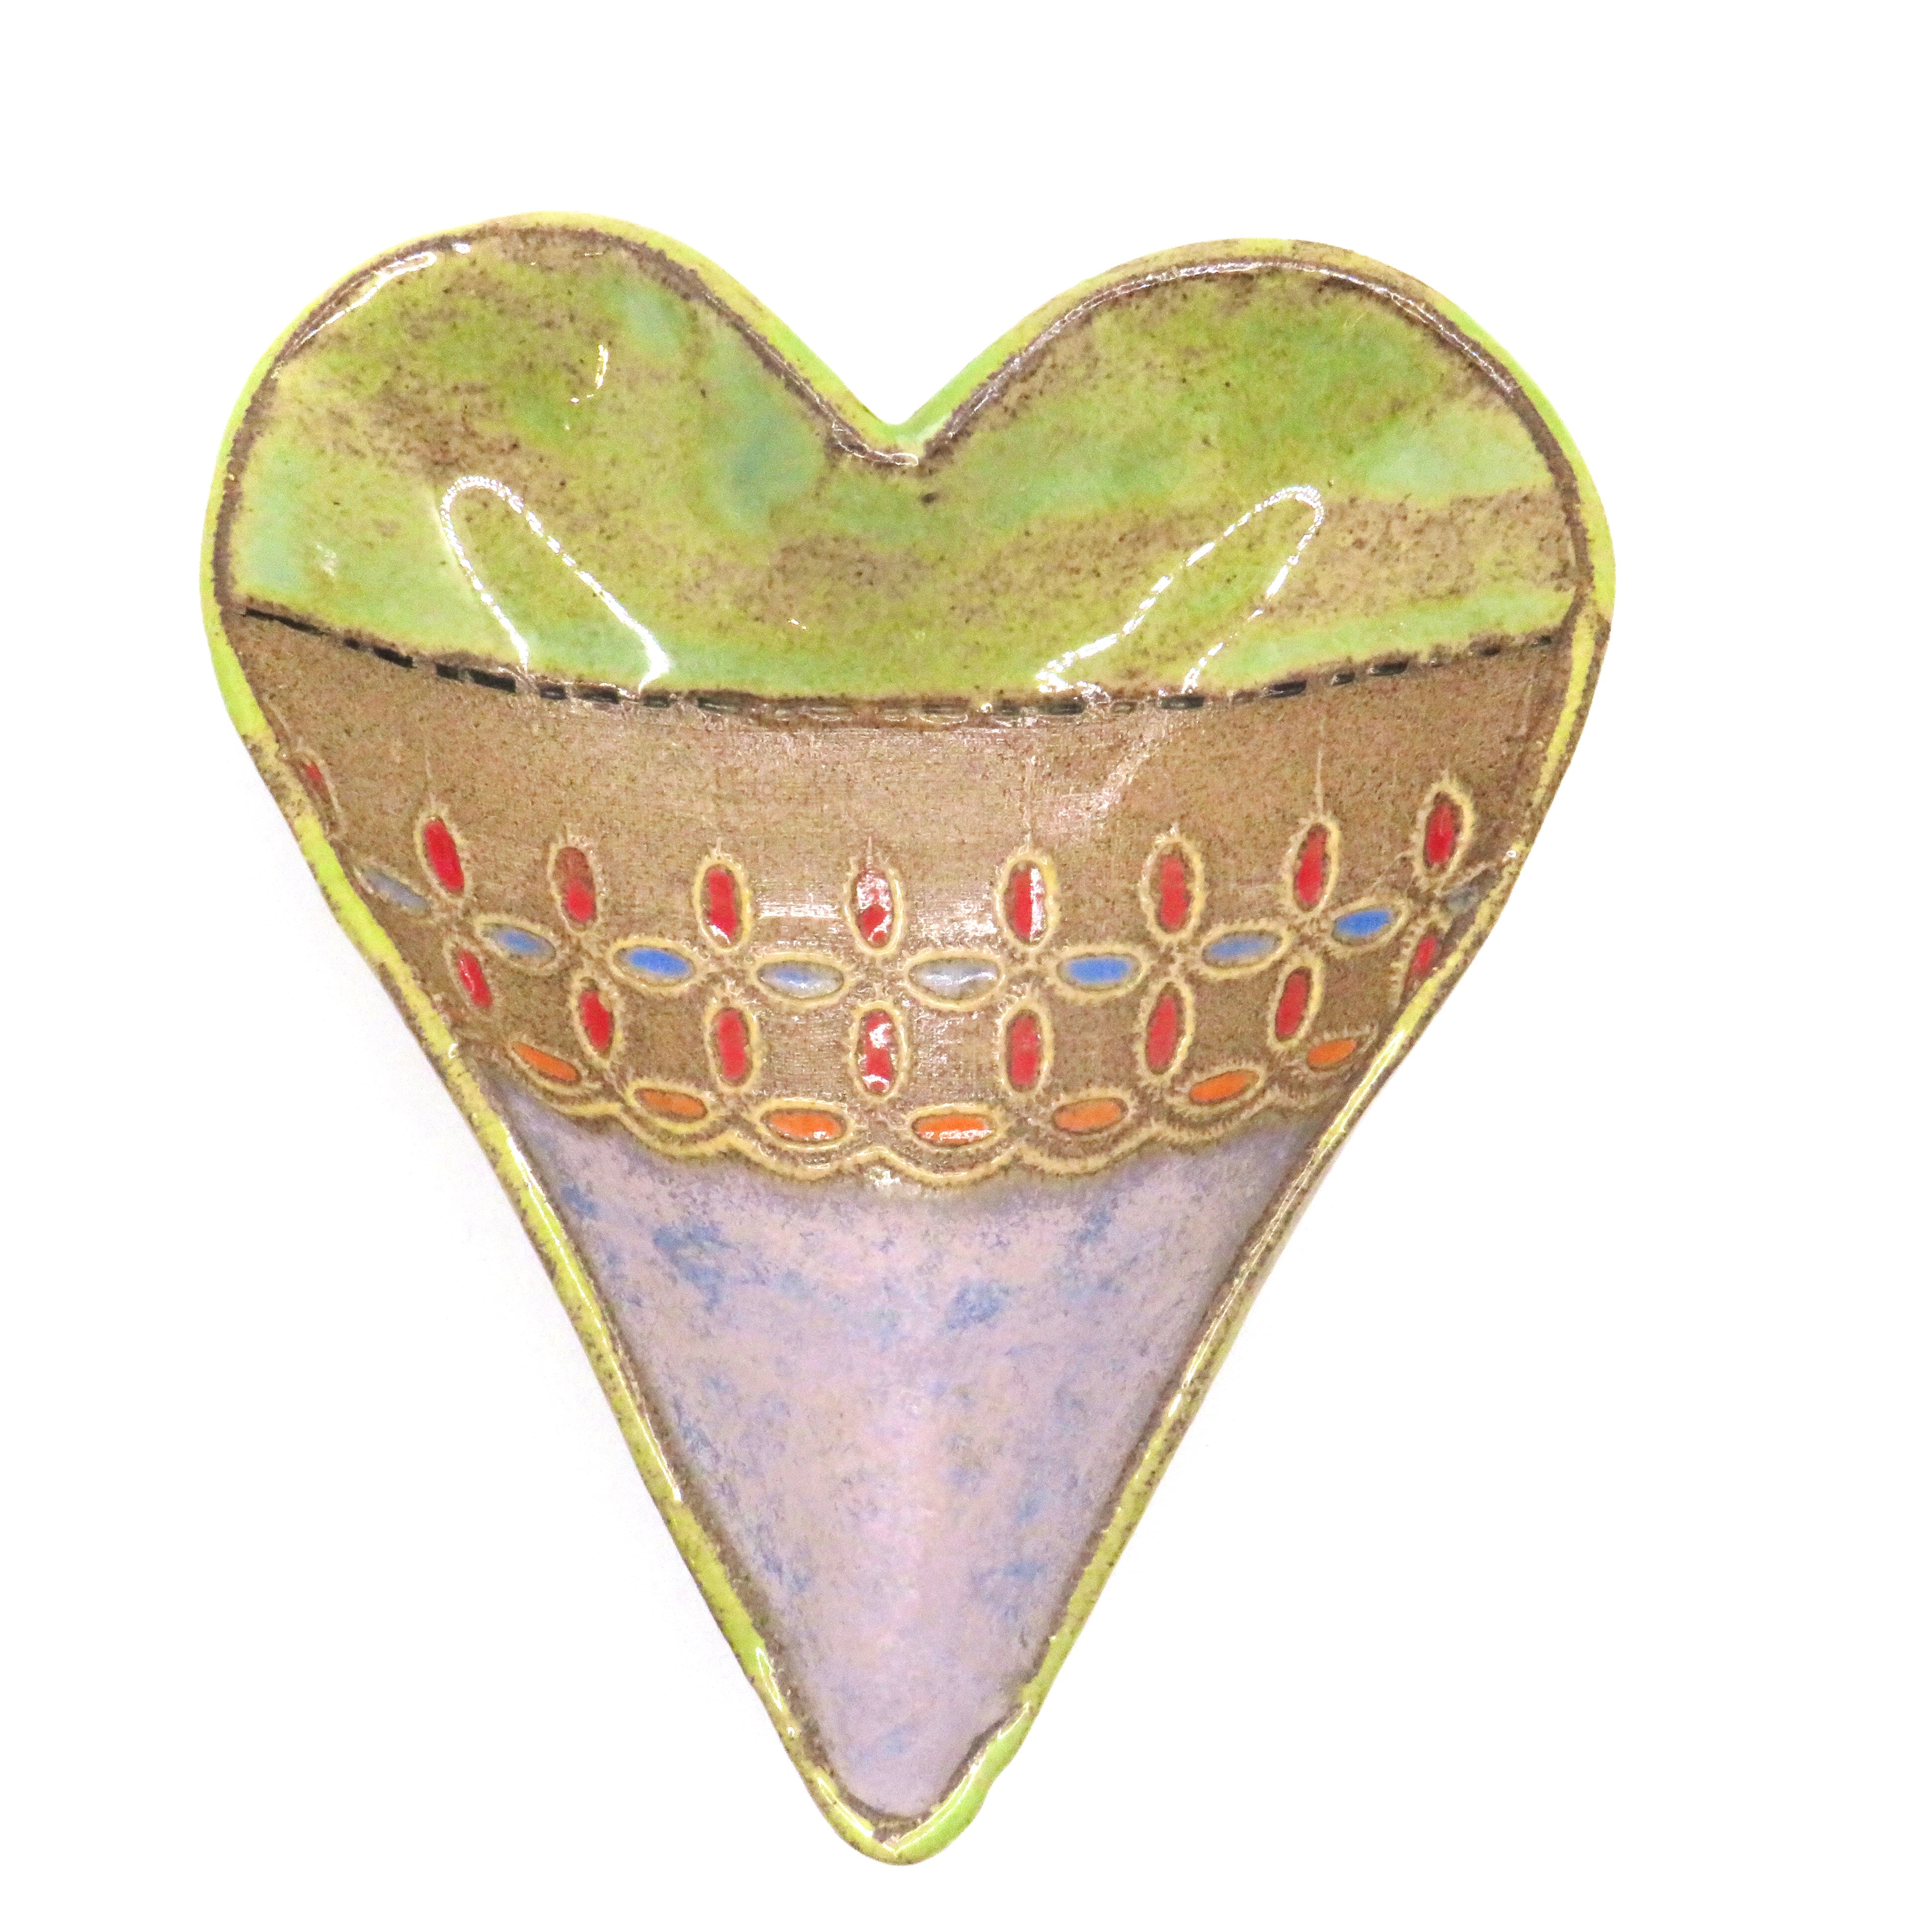 Ceramic Heart bowl